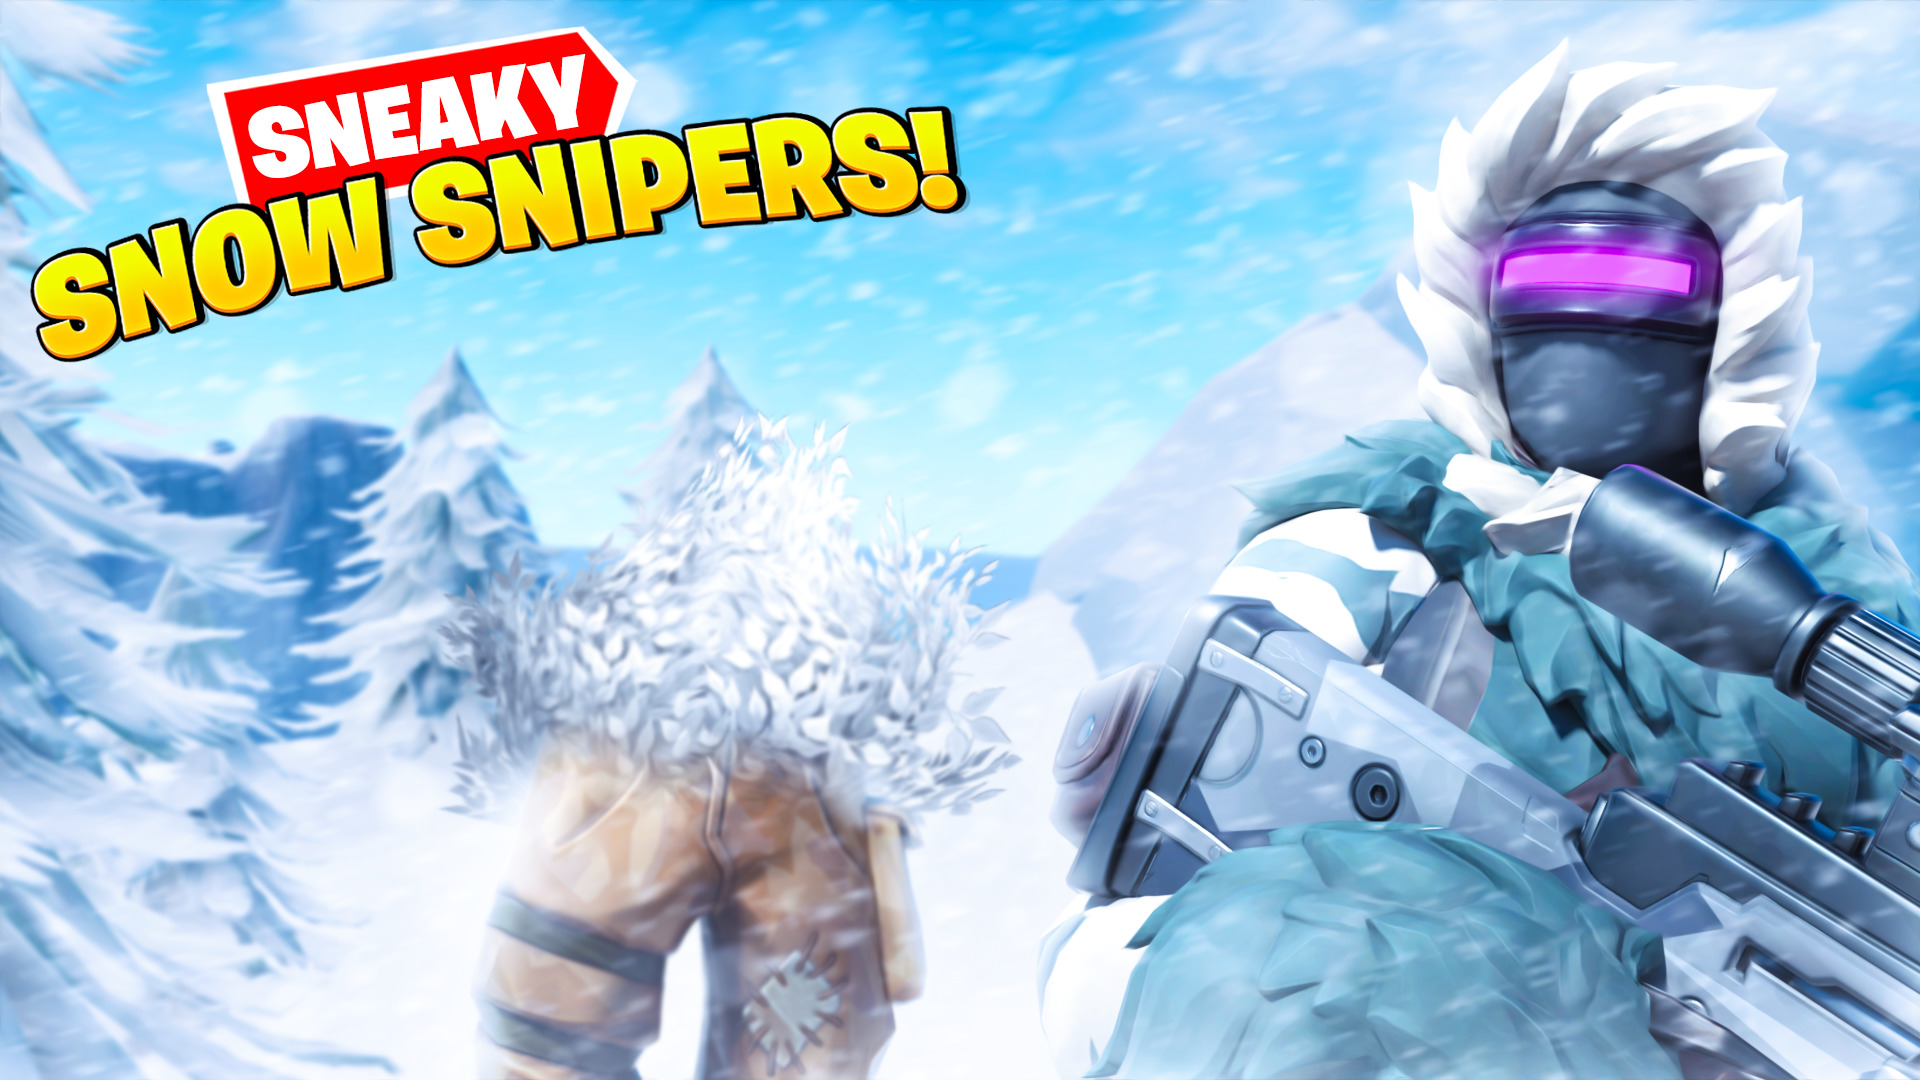 Snow Sniper Fortnite Wallpapers